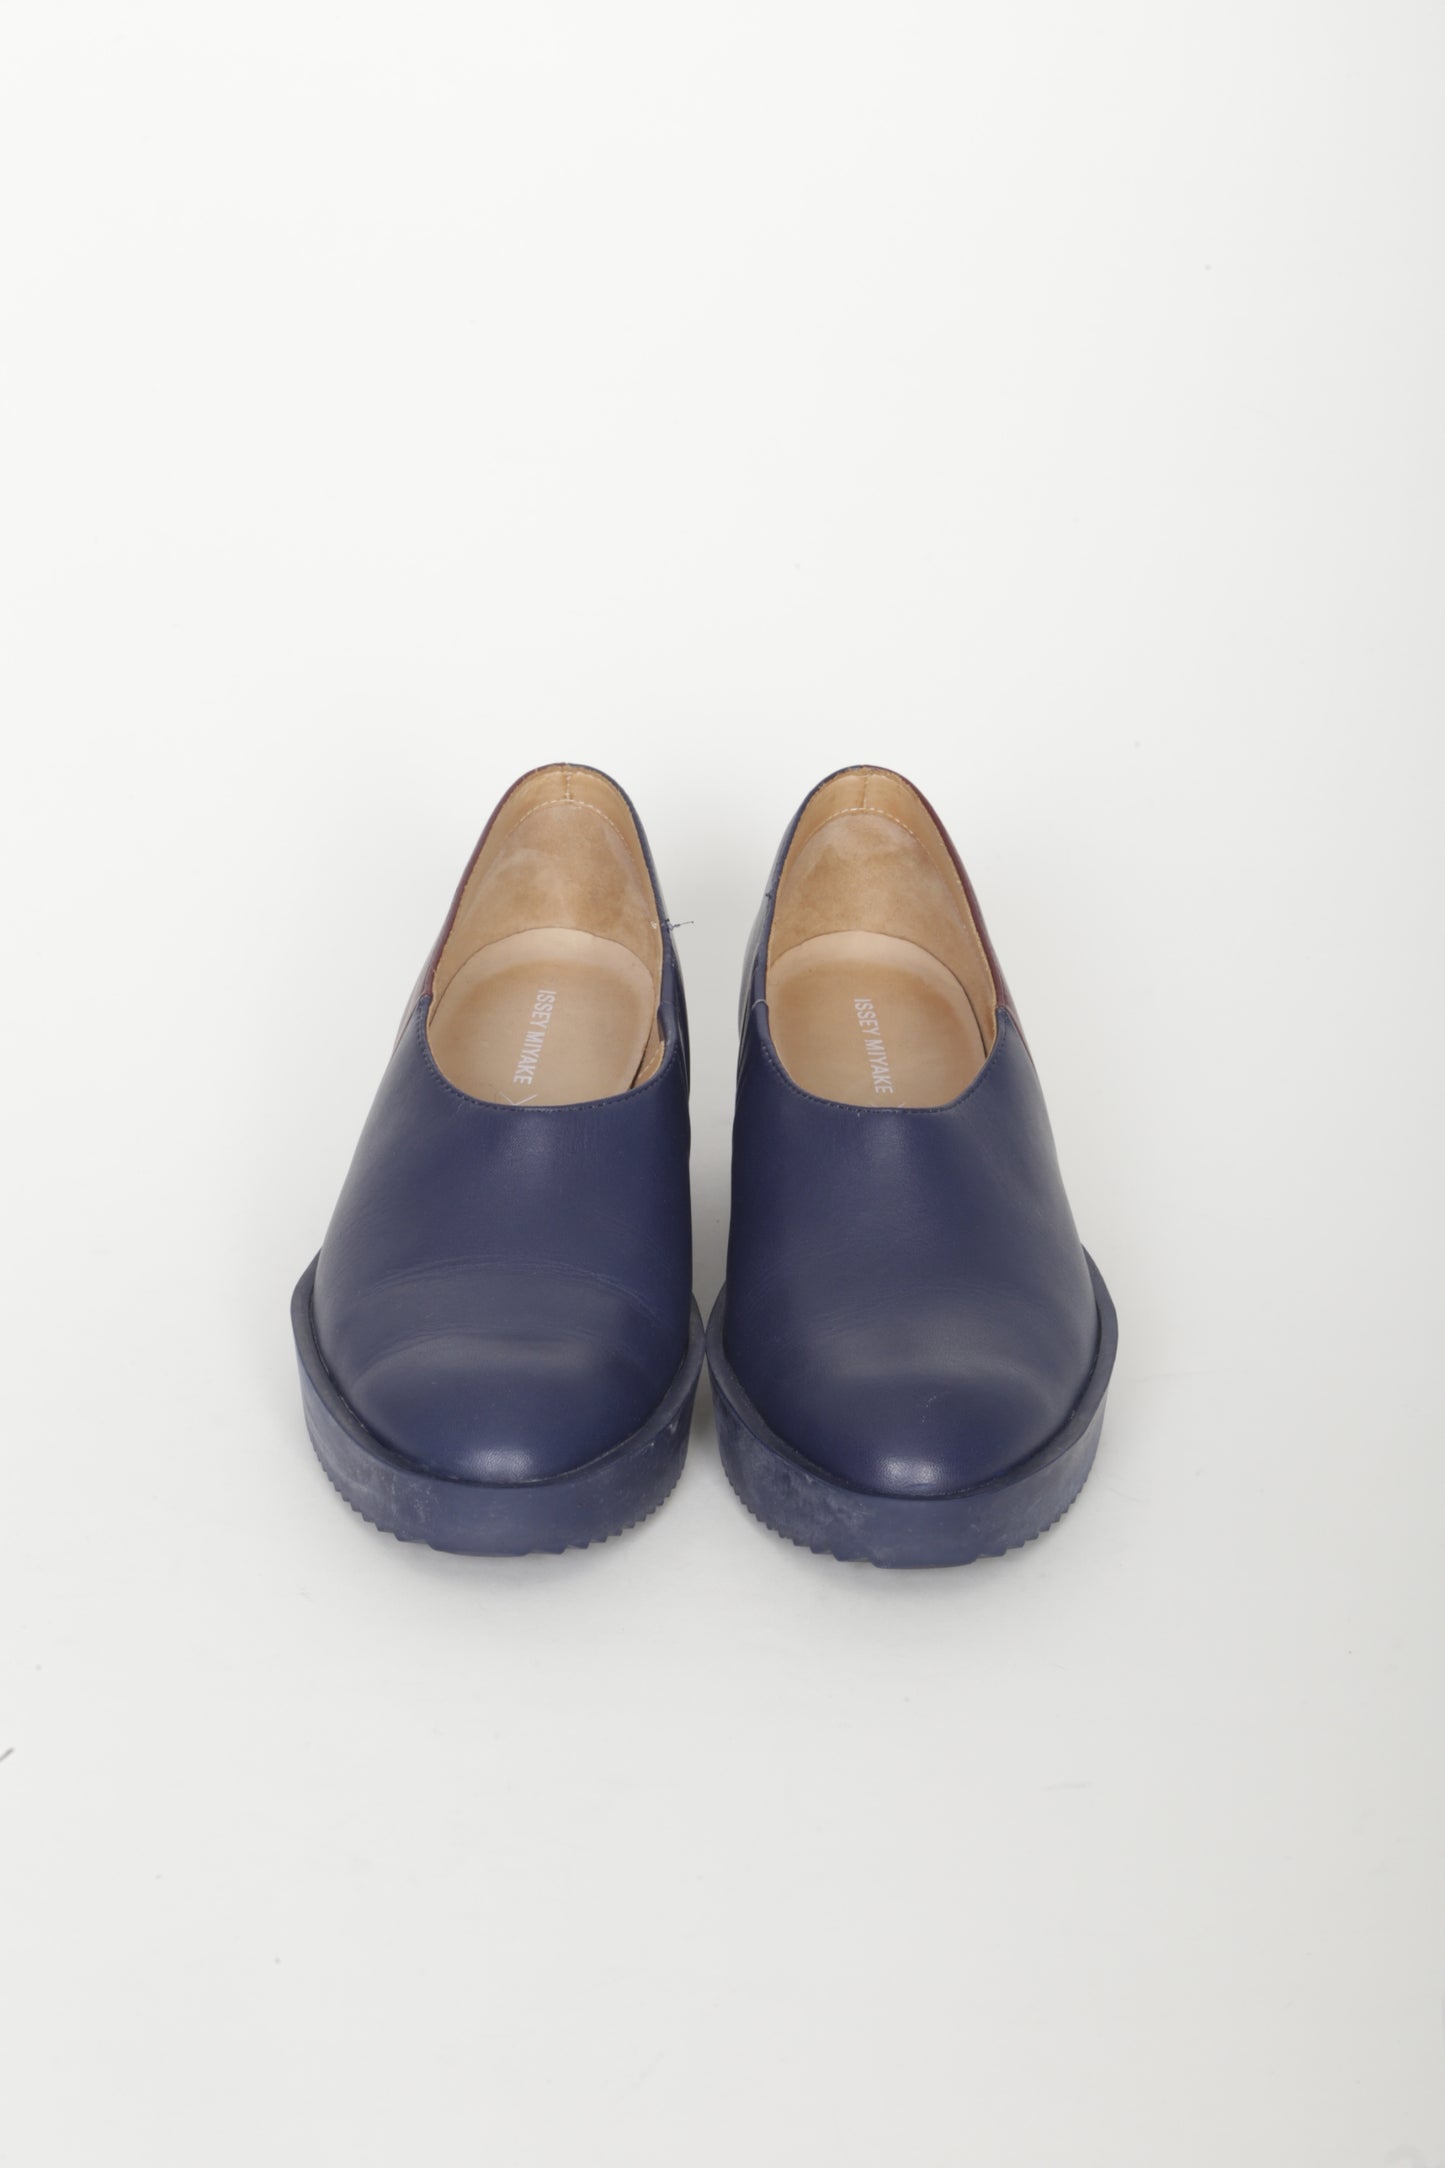 Issey Miyake x United Nude Womens Blue Shoes Size EU 36